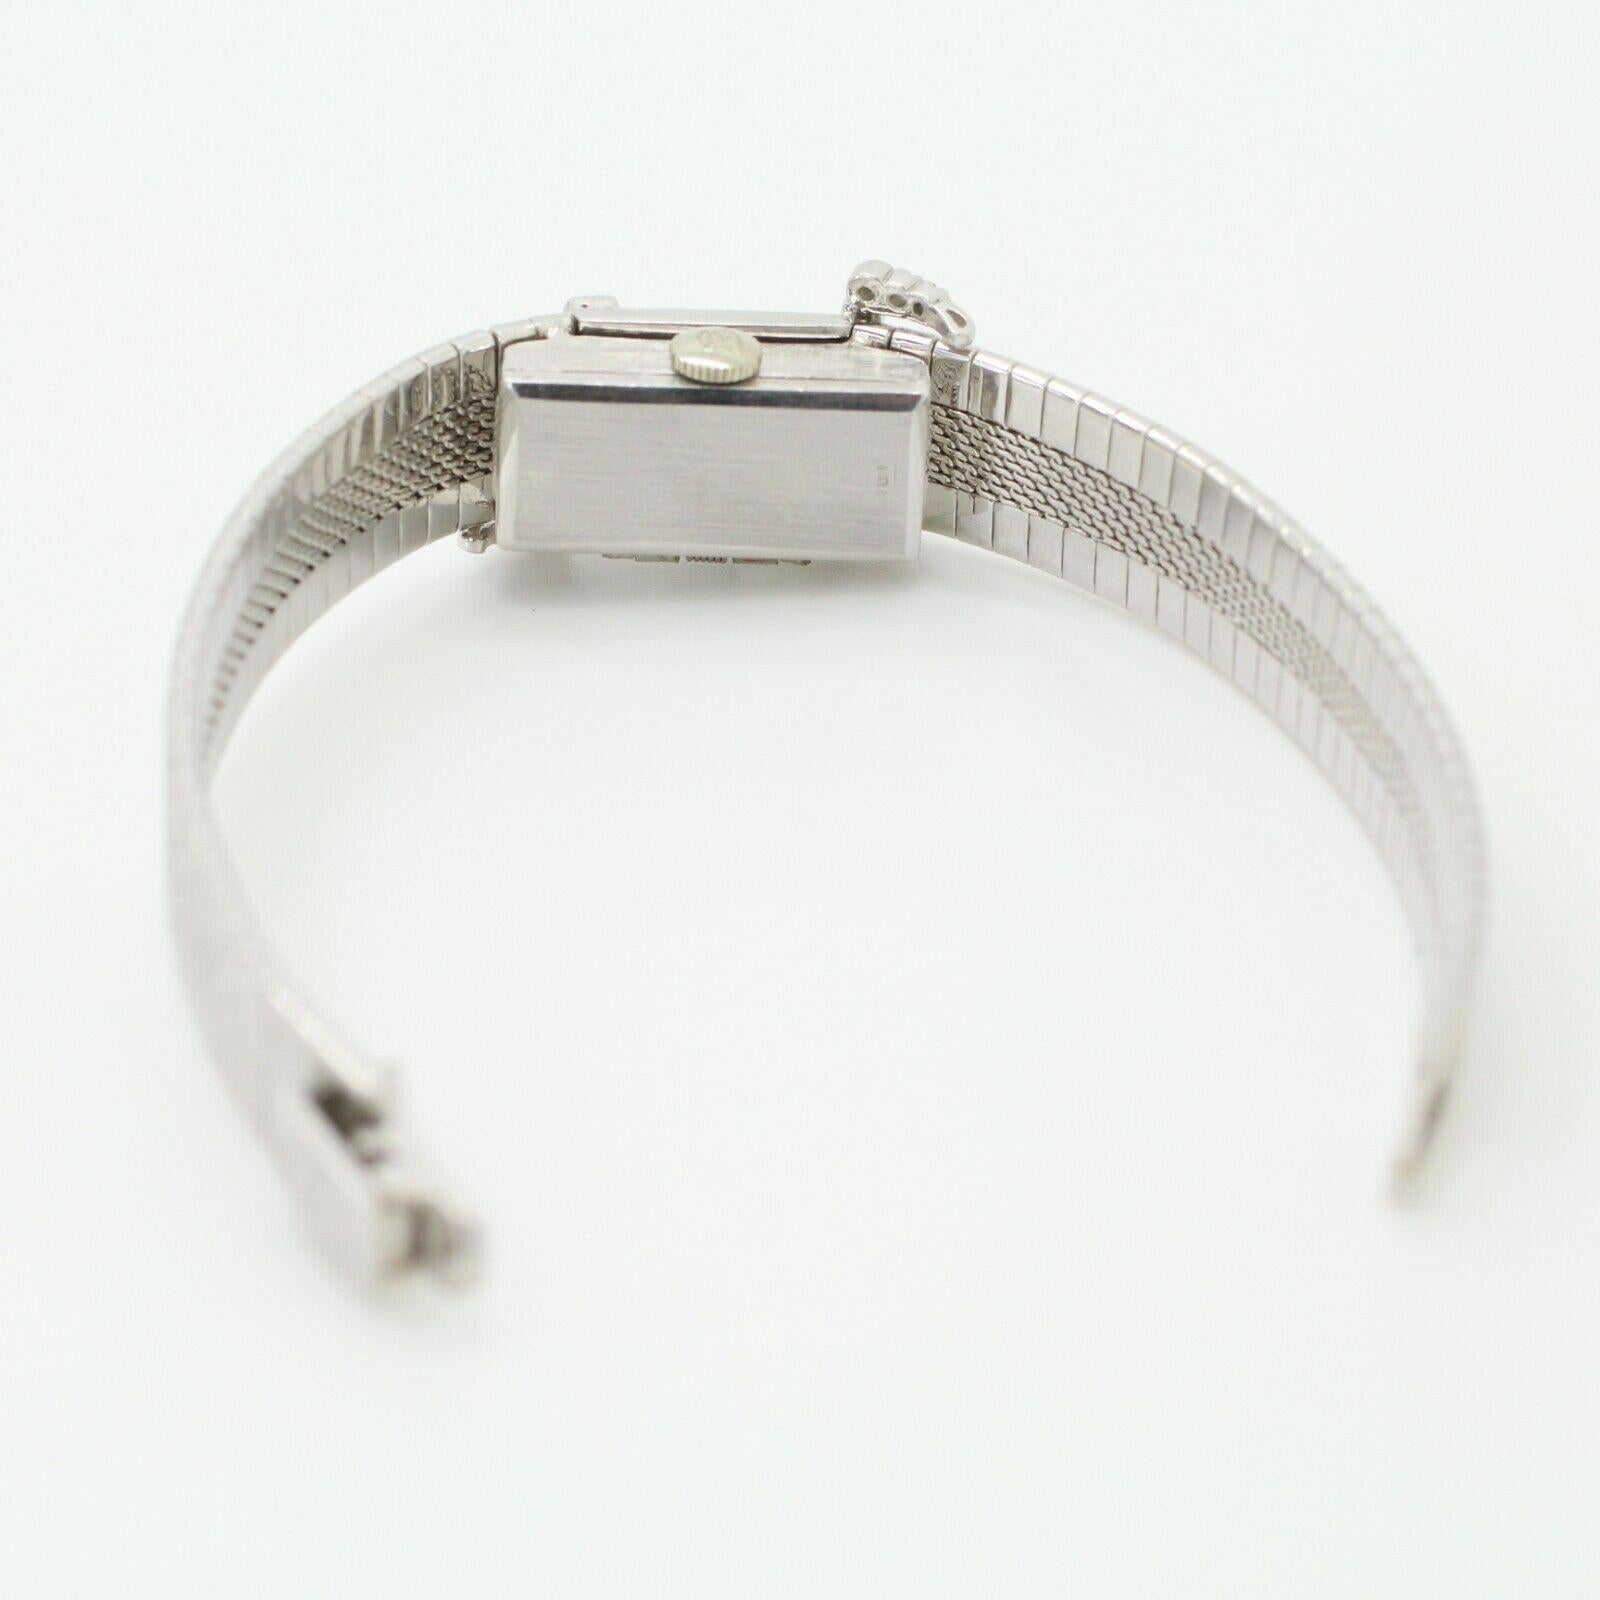 Contemporary Baume & Mercier 14k White Gold Diamond Watch Bracelet